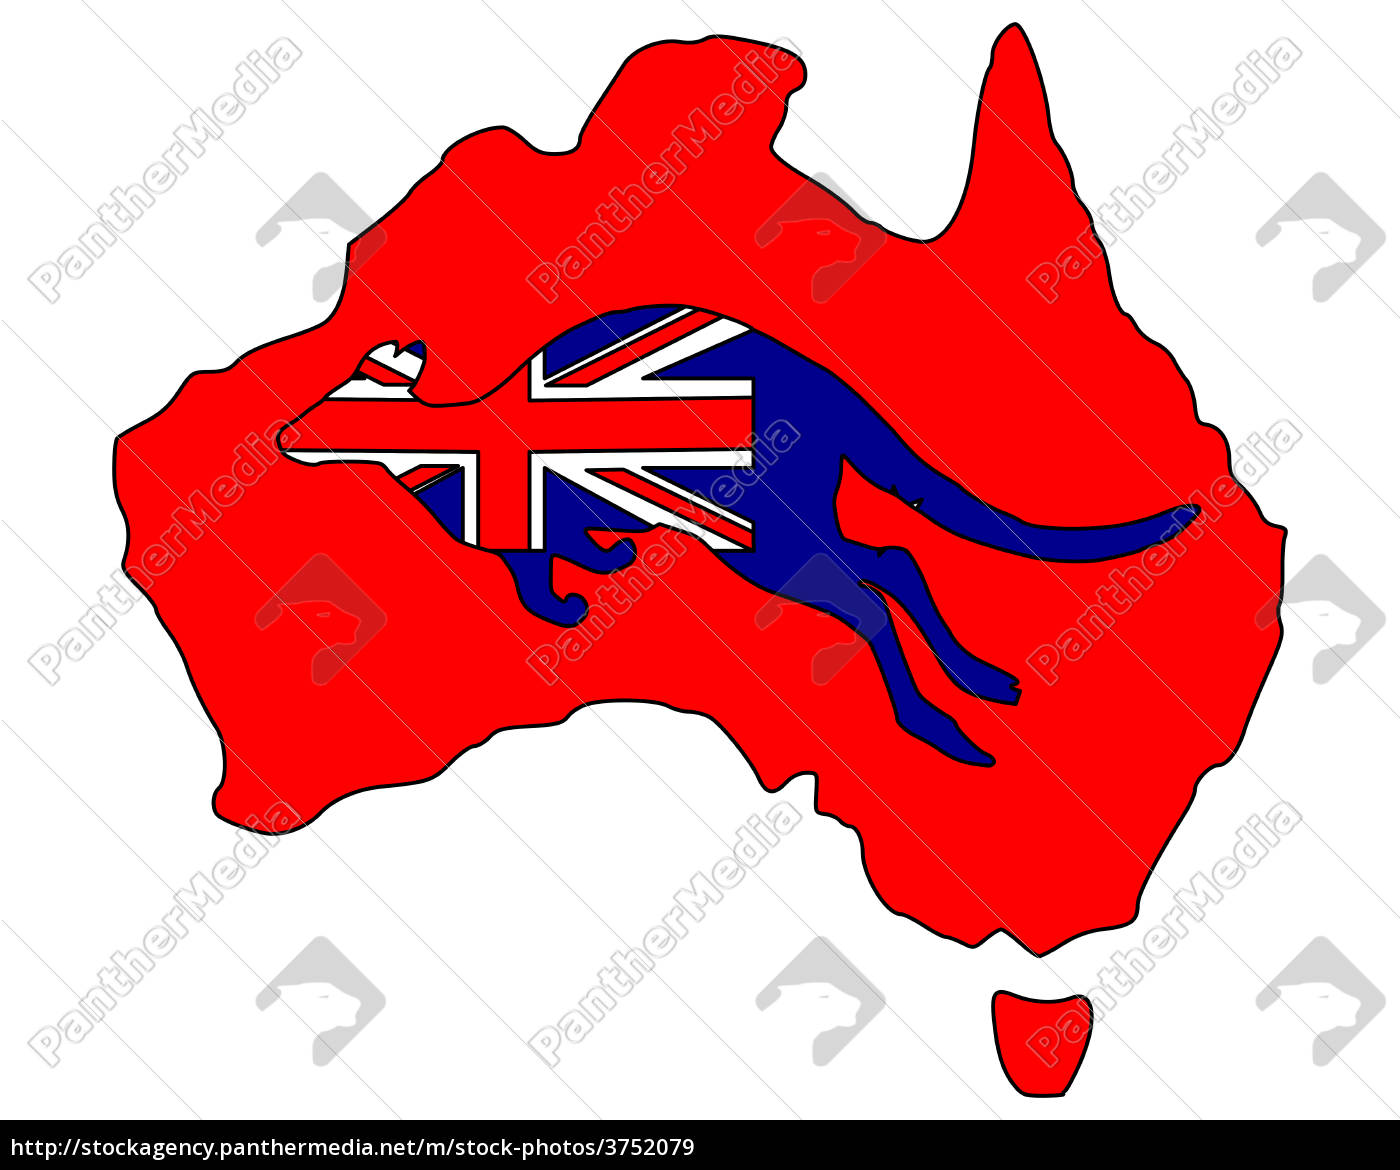 Australisches Känguru - Stockfoto - #3752079 | Bildagentur PantherMedia